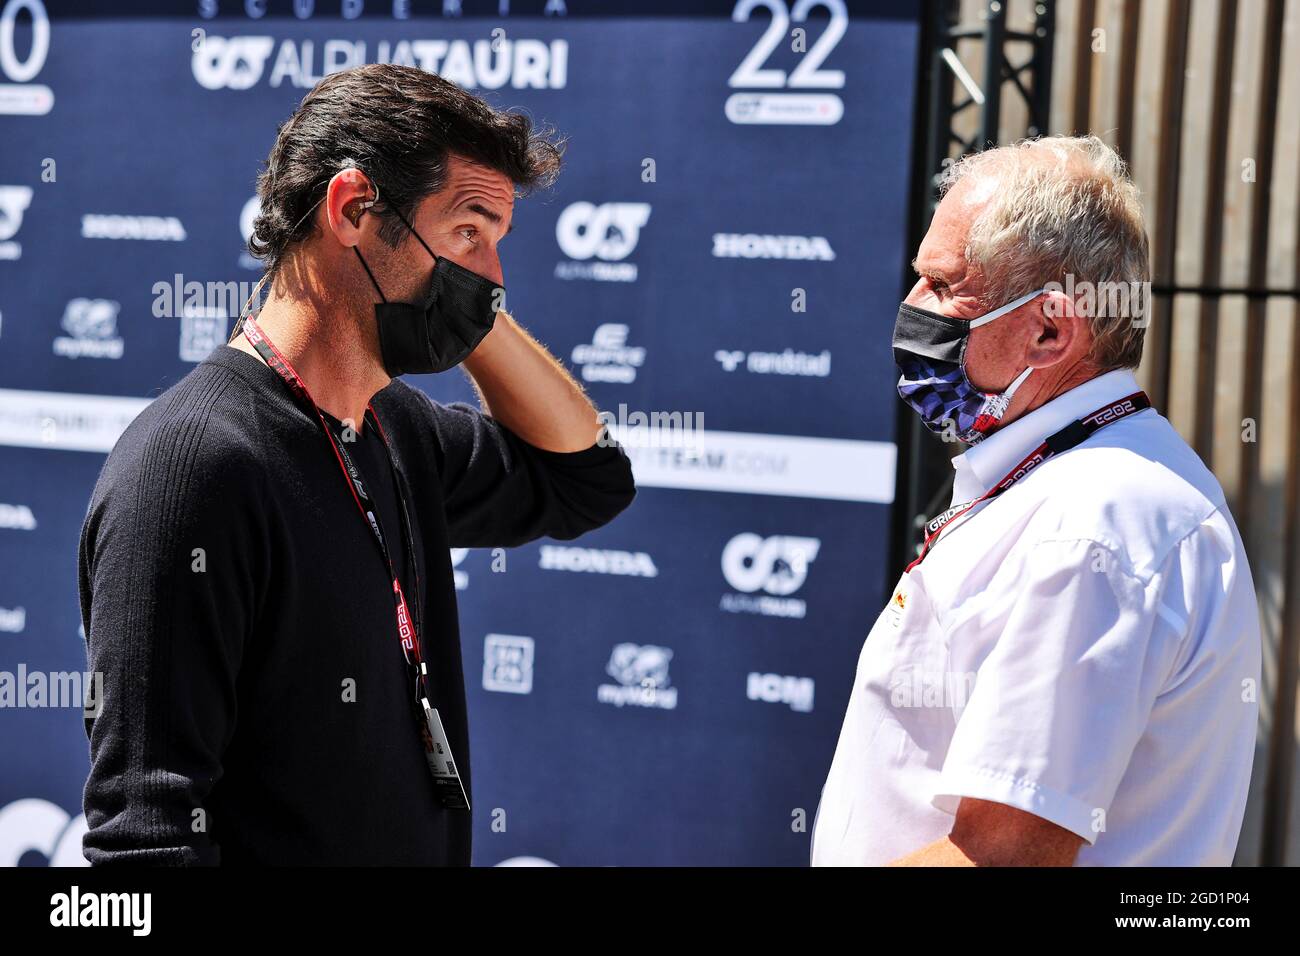 (L to R): Mark Webber (AUS) Channel 4 Presenter with Dr Helmut Marko (AUT) Red Bull Motorsport Consultant. Steiermark Grand Prix, Saturday 26th June 2021. Spielberg, Austria. Stock Photo